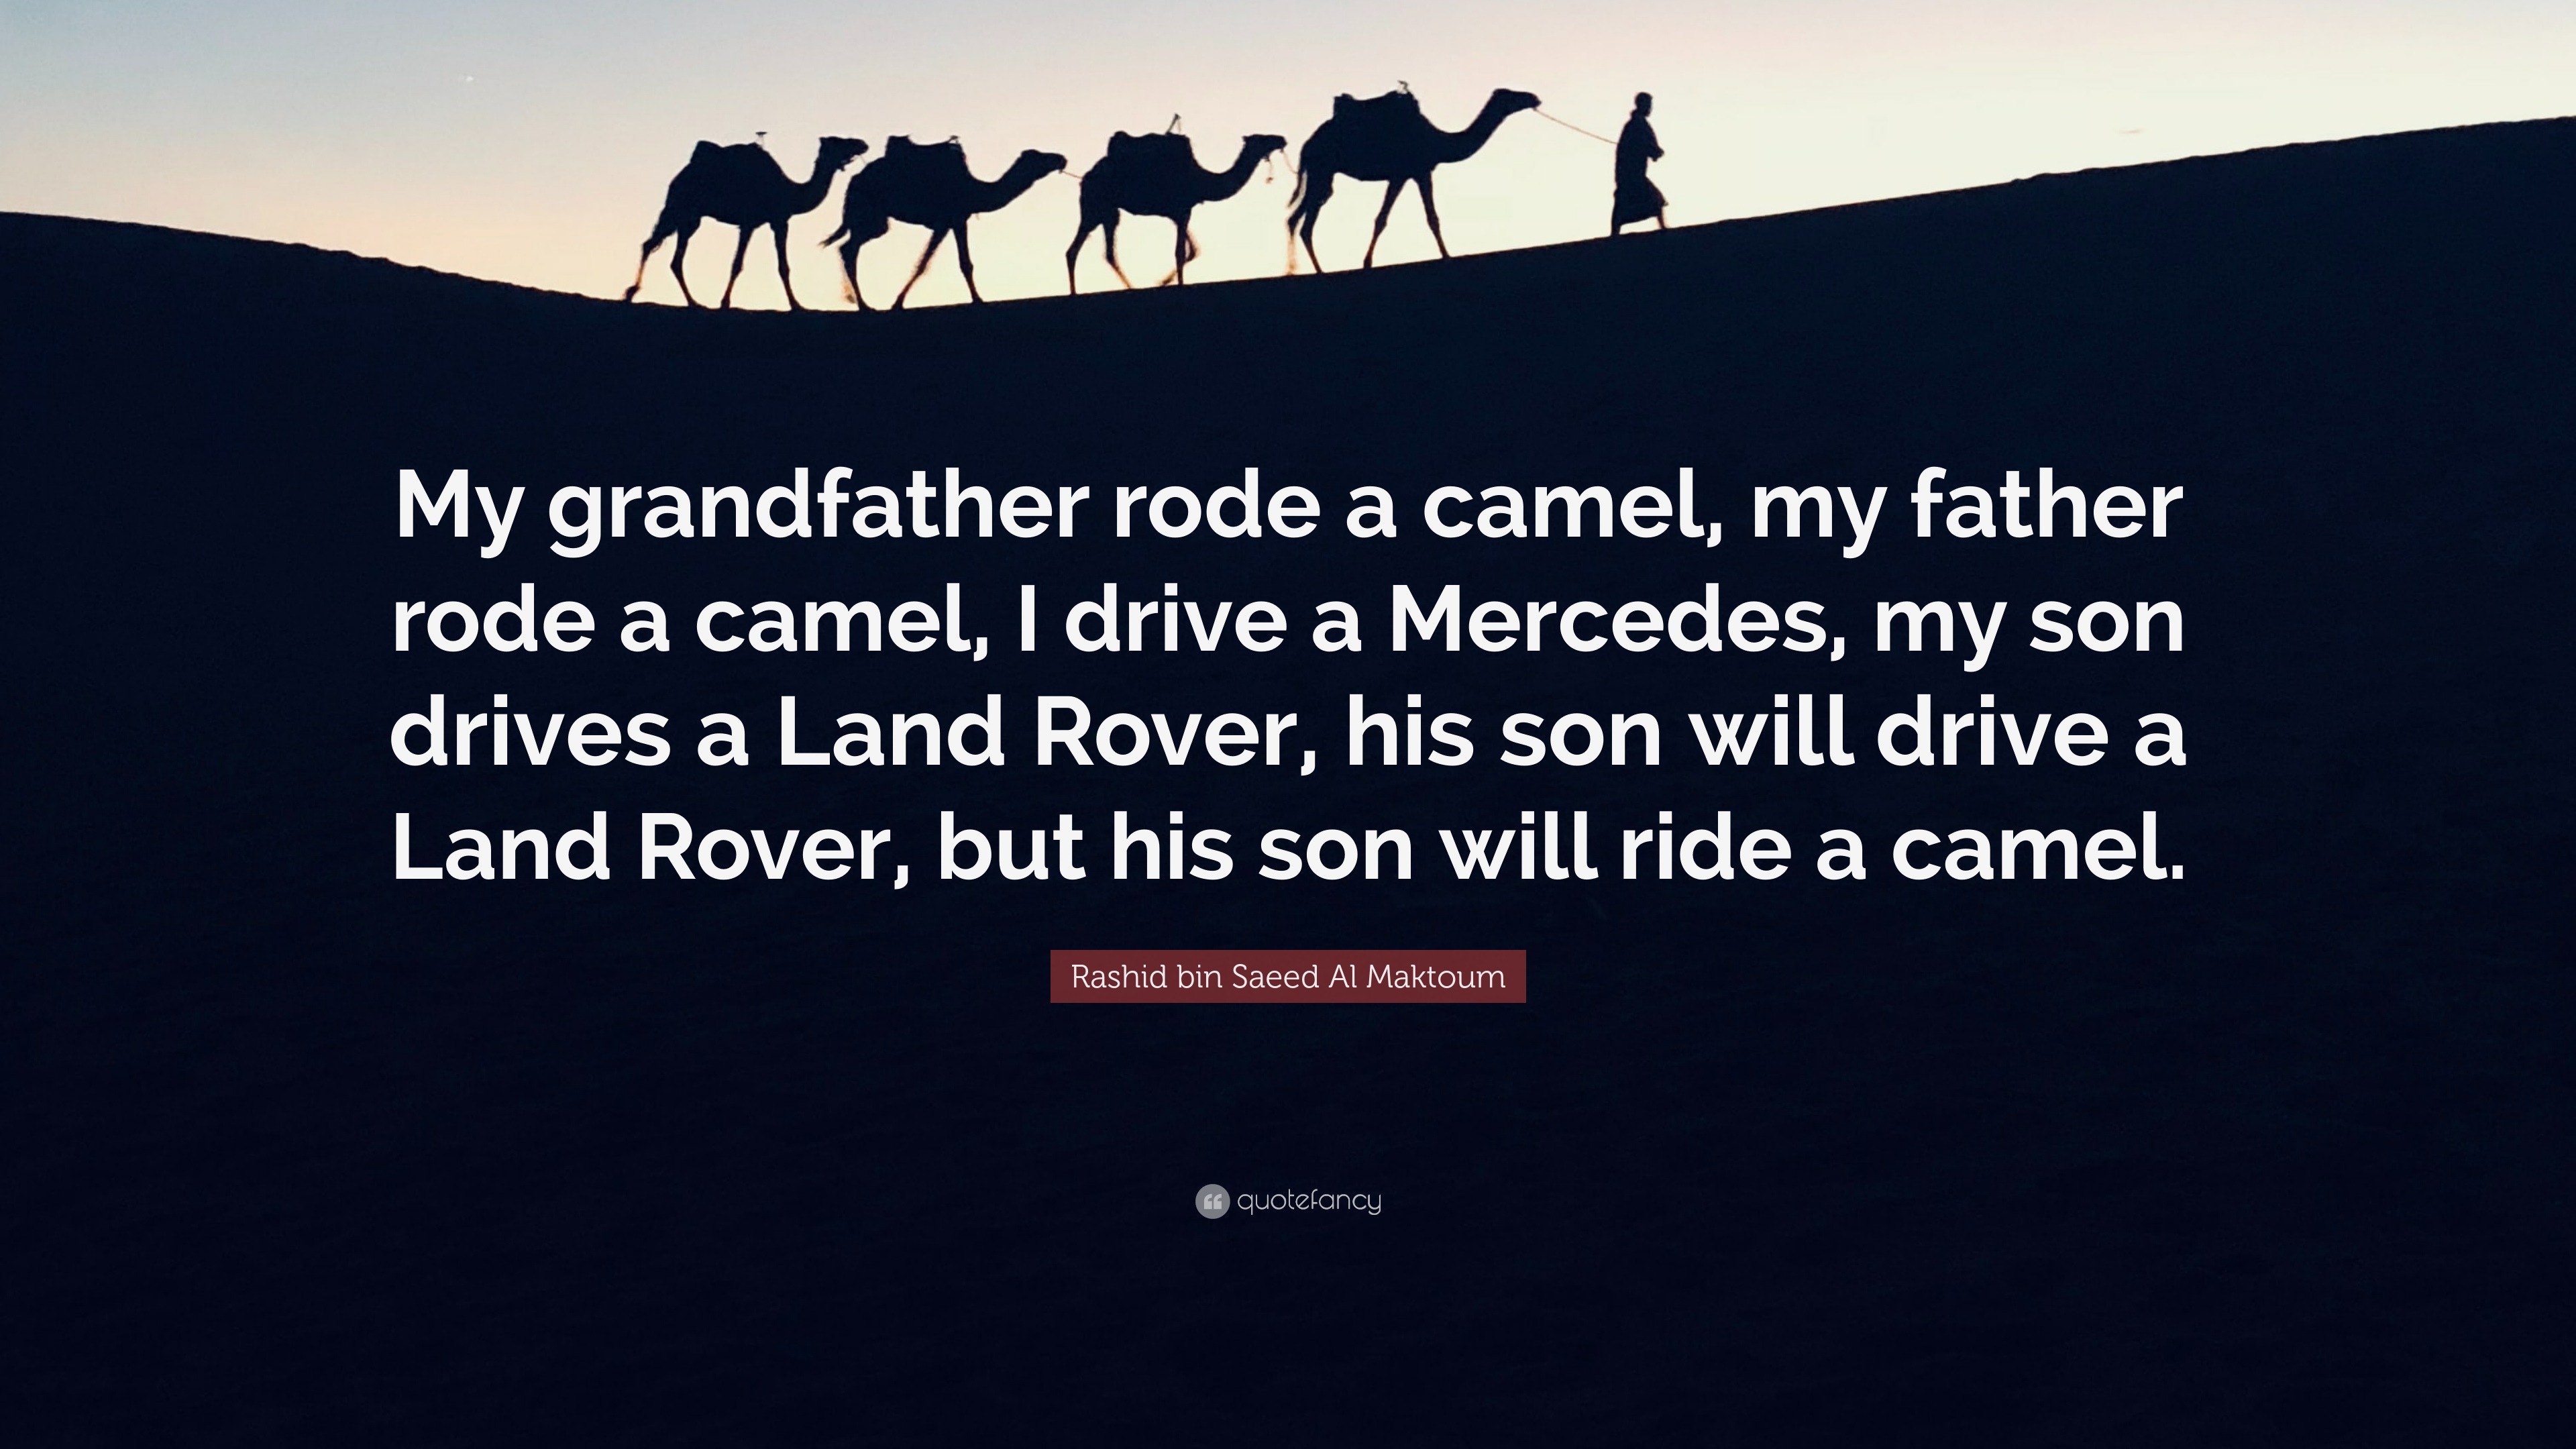 Rashid bin Saeed Al Maktoum Quote: “My grandfather rode a camel, my father  rode a camel, I drive a Mercedes, my son drives a Land Rover, his son will  drive ...”